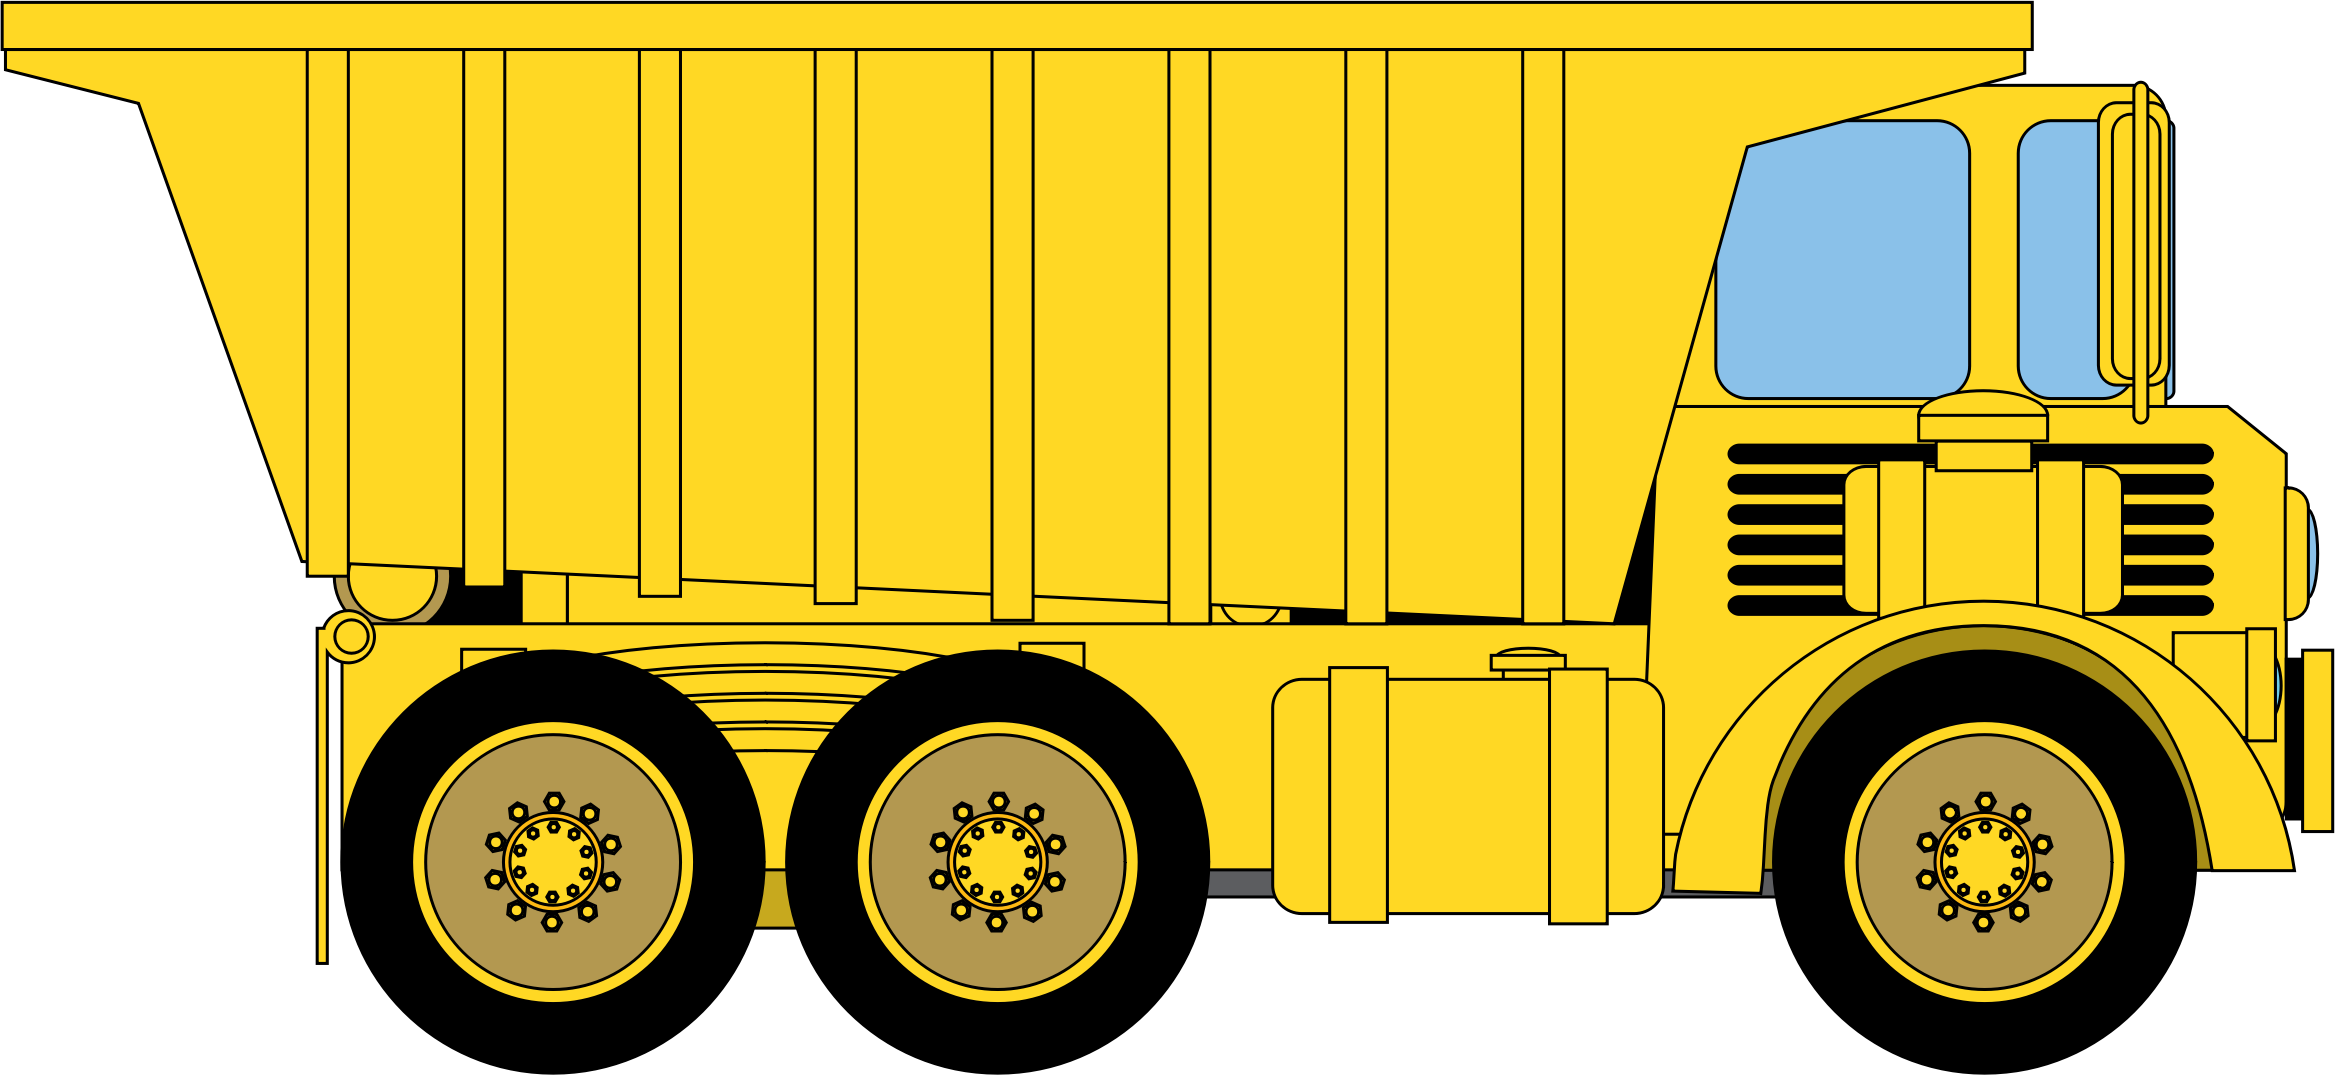 Clipart dump truck image #32183